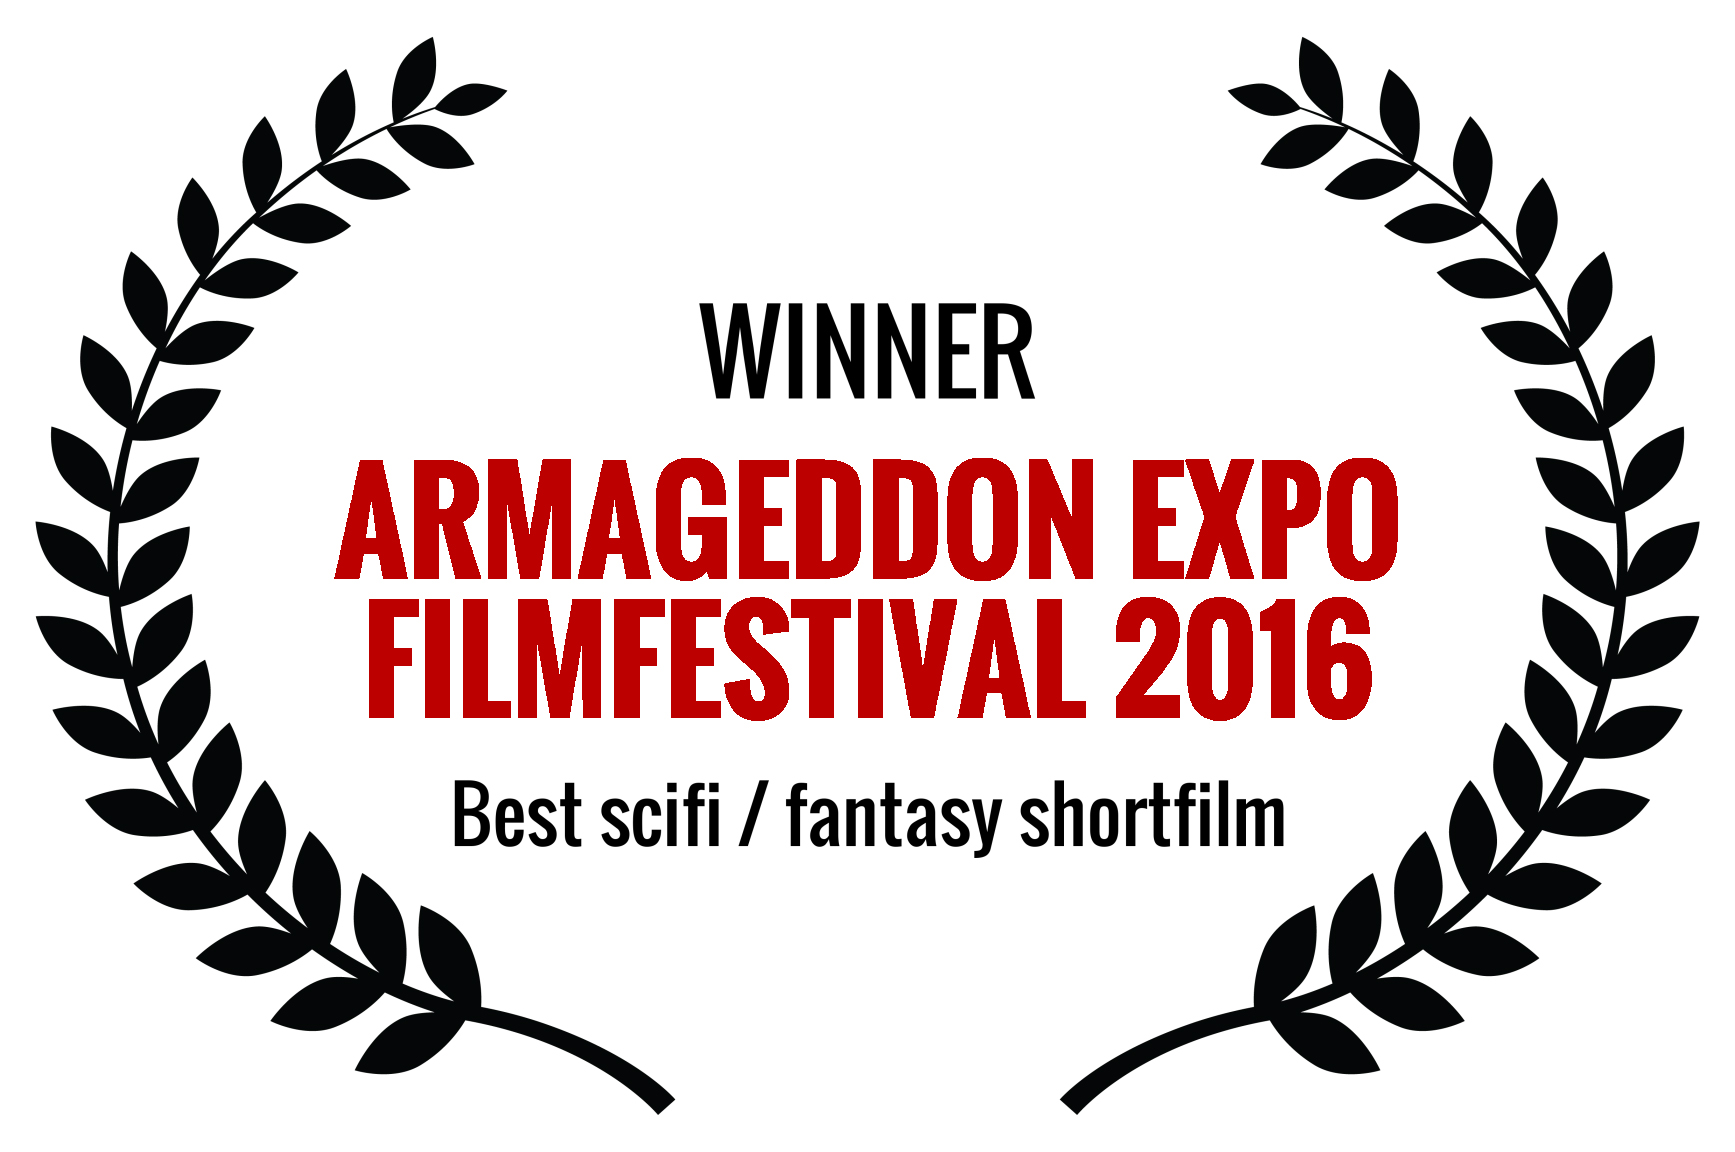 winner-armageddon-expo-filmfestival-2016-best-scifi-fantasy-shortfilm